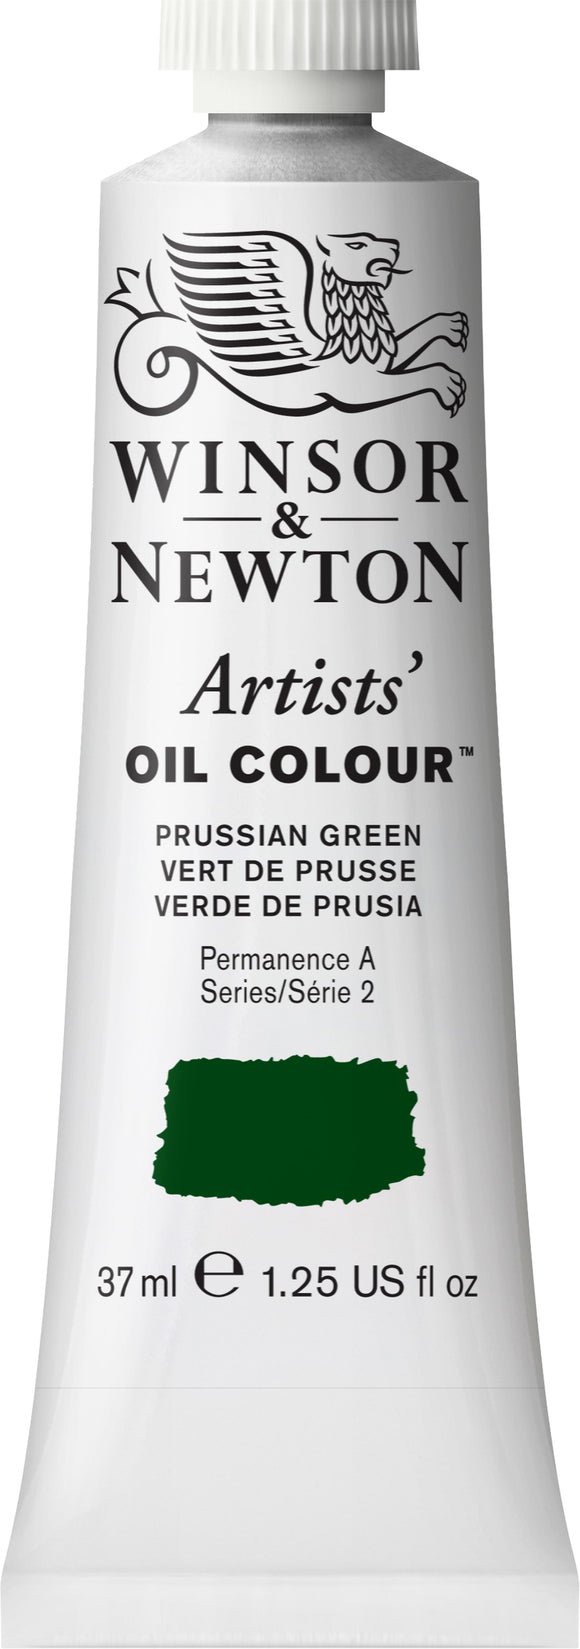 Winsor & Newton Artists Oil Color Prussian Green 37Ml